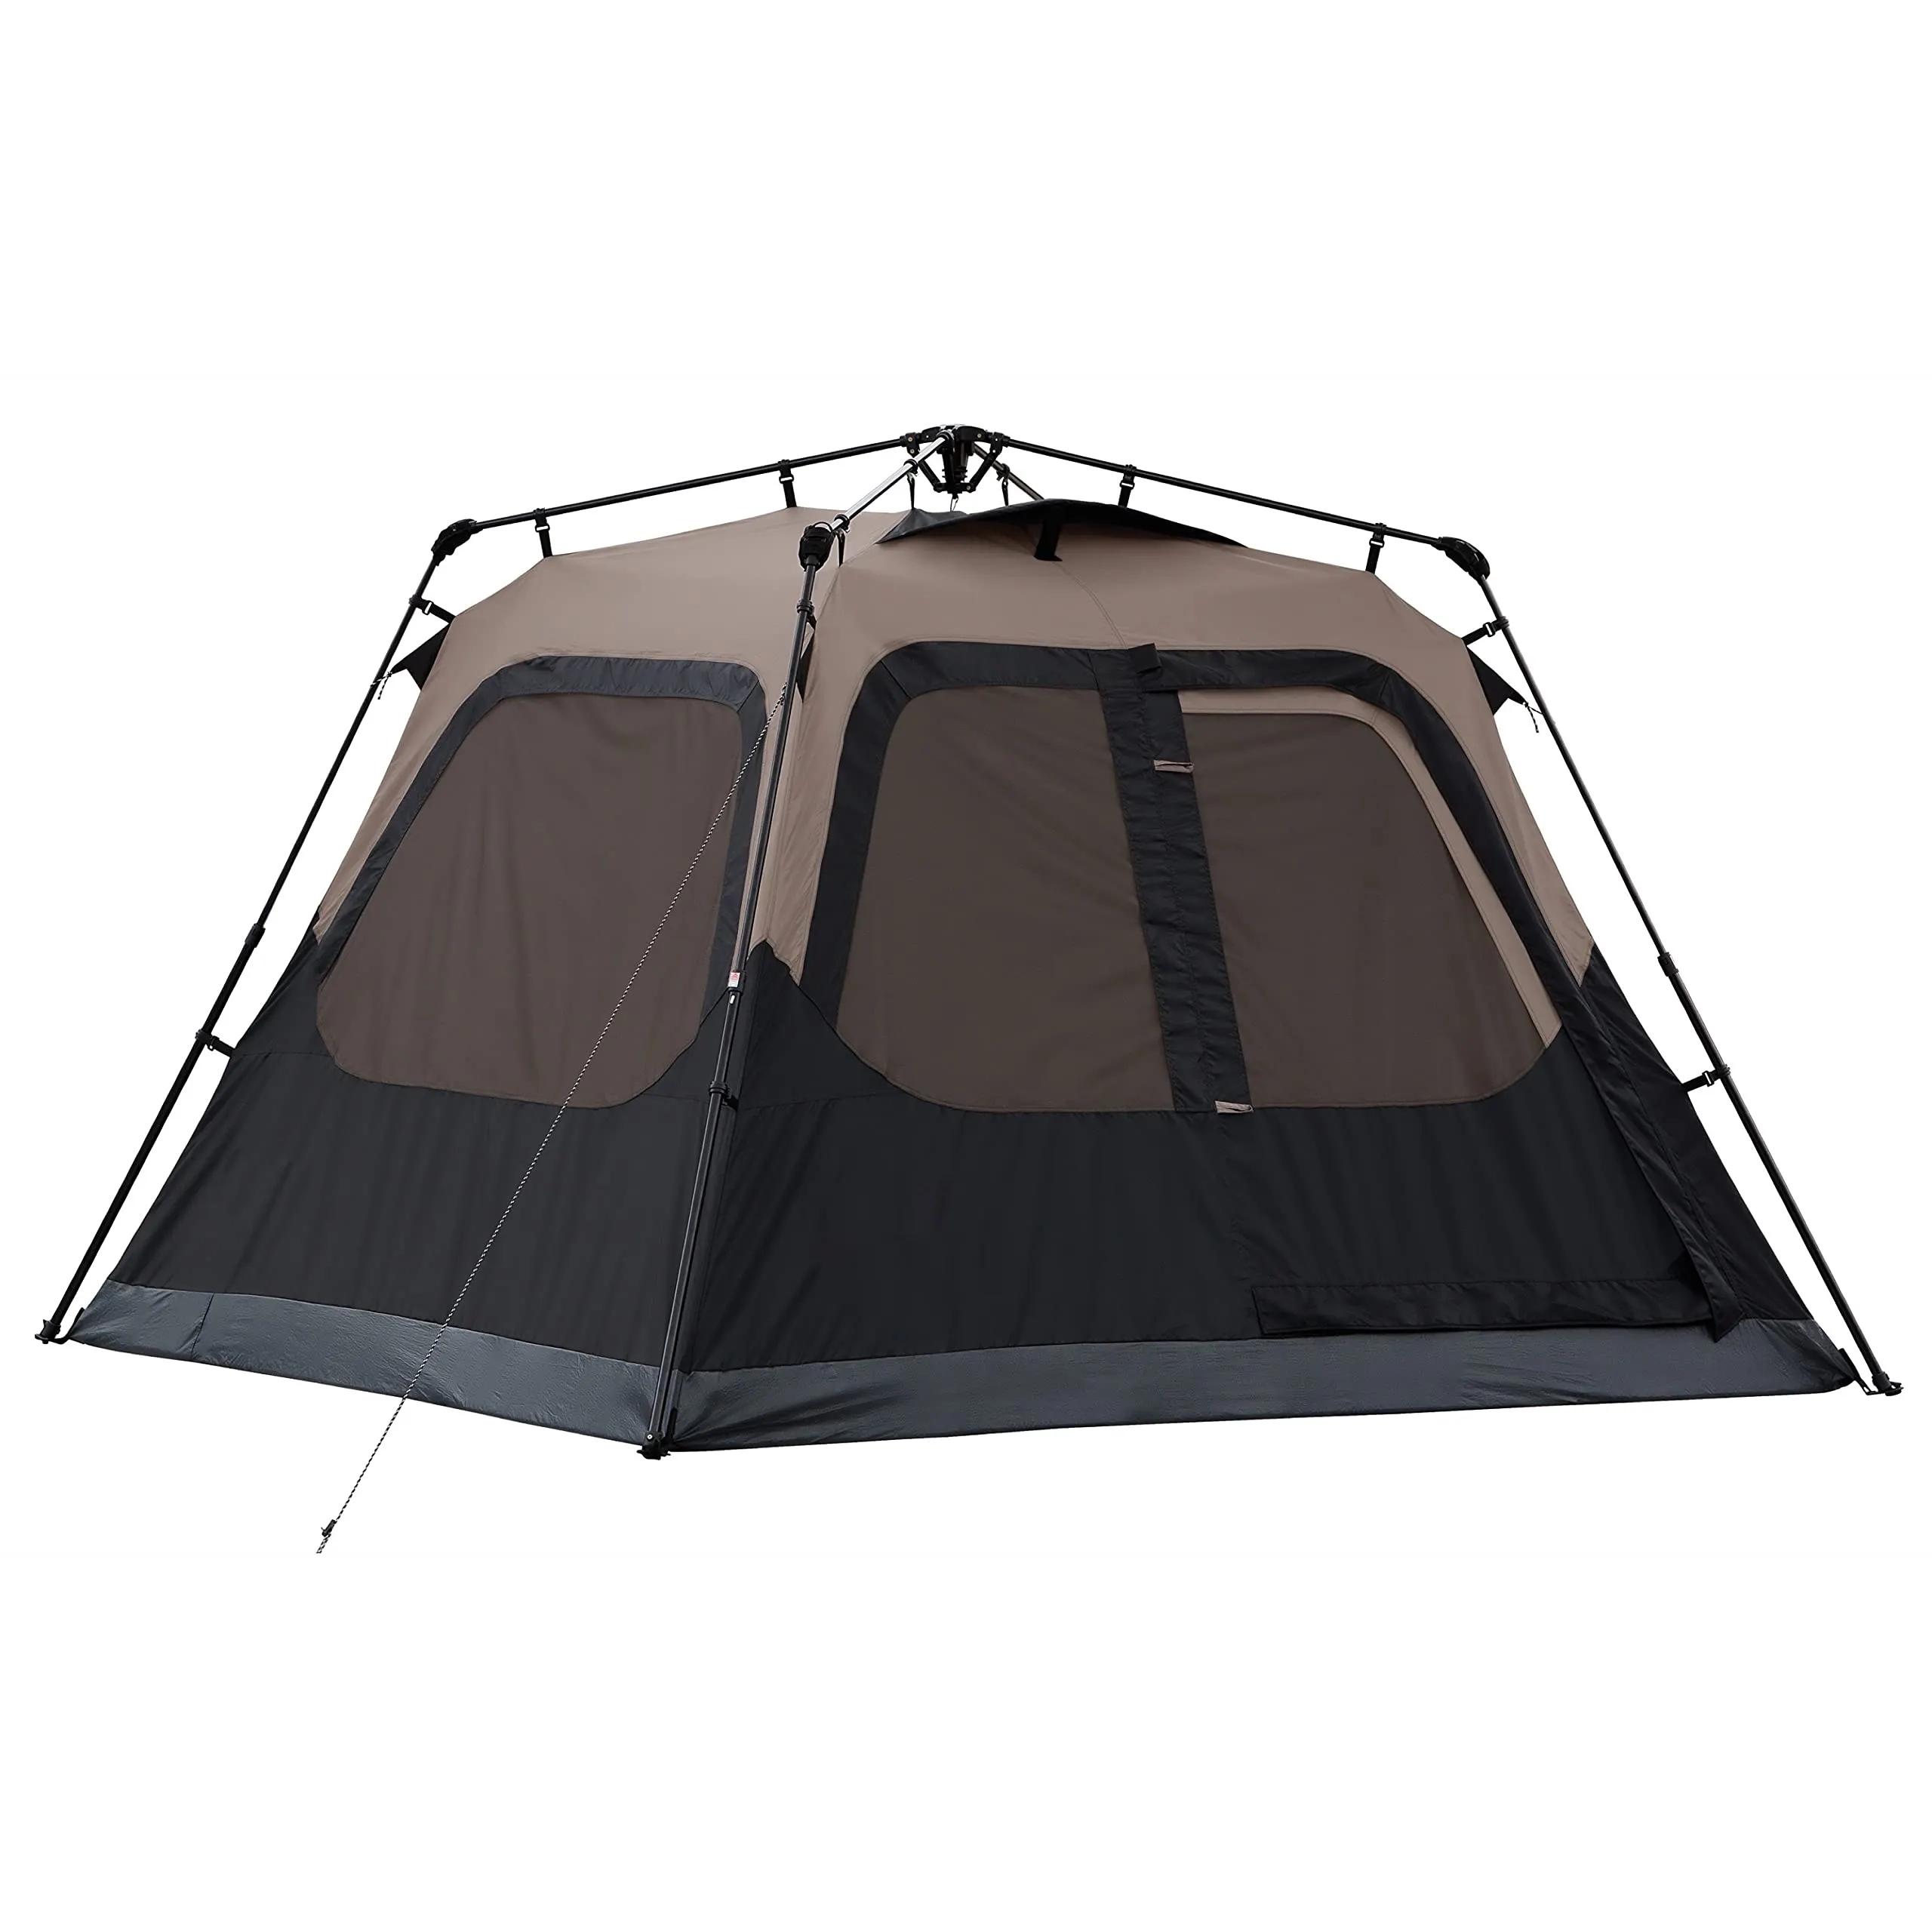 Tenda tahan cuaca luar ruangan 60 detik, pengaturan instan tenda berkemah luar ruangan 3-4 orang 4 kamar kabin tenda campown